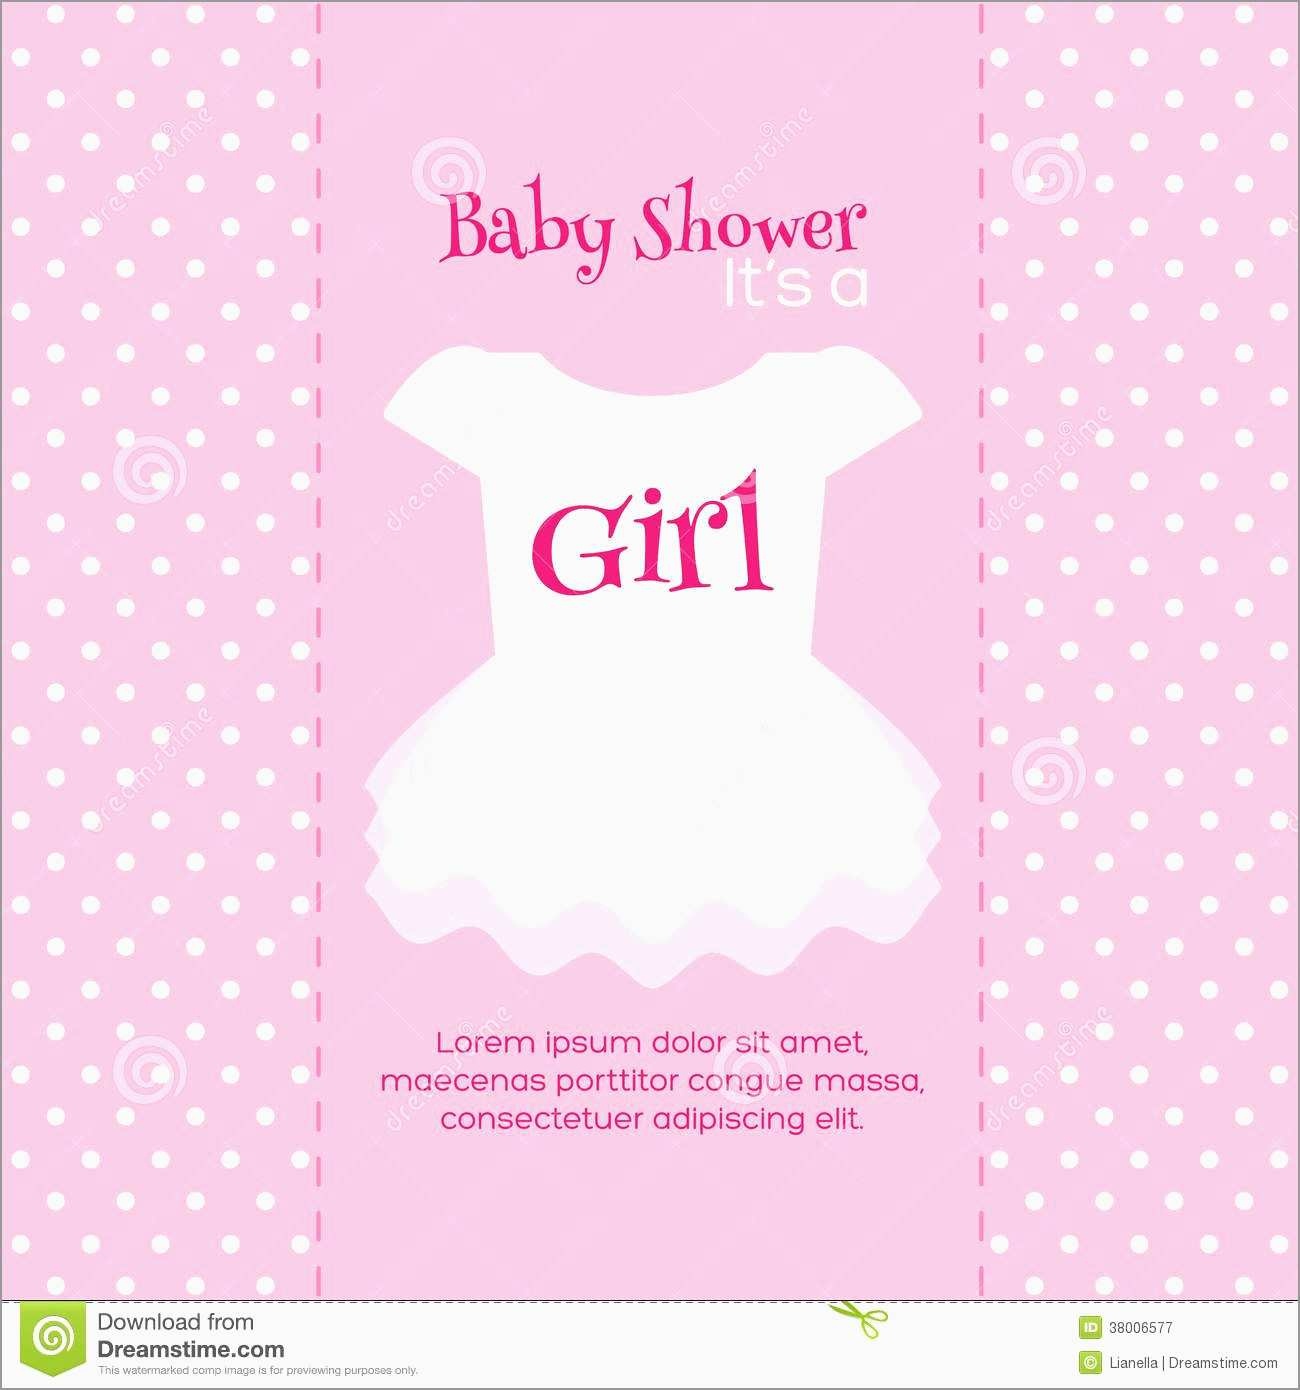 Luxury Free Baby Shower Invitation Templates | Best Of Template - Create Your Own Baby Shower Invitations Free Printable